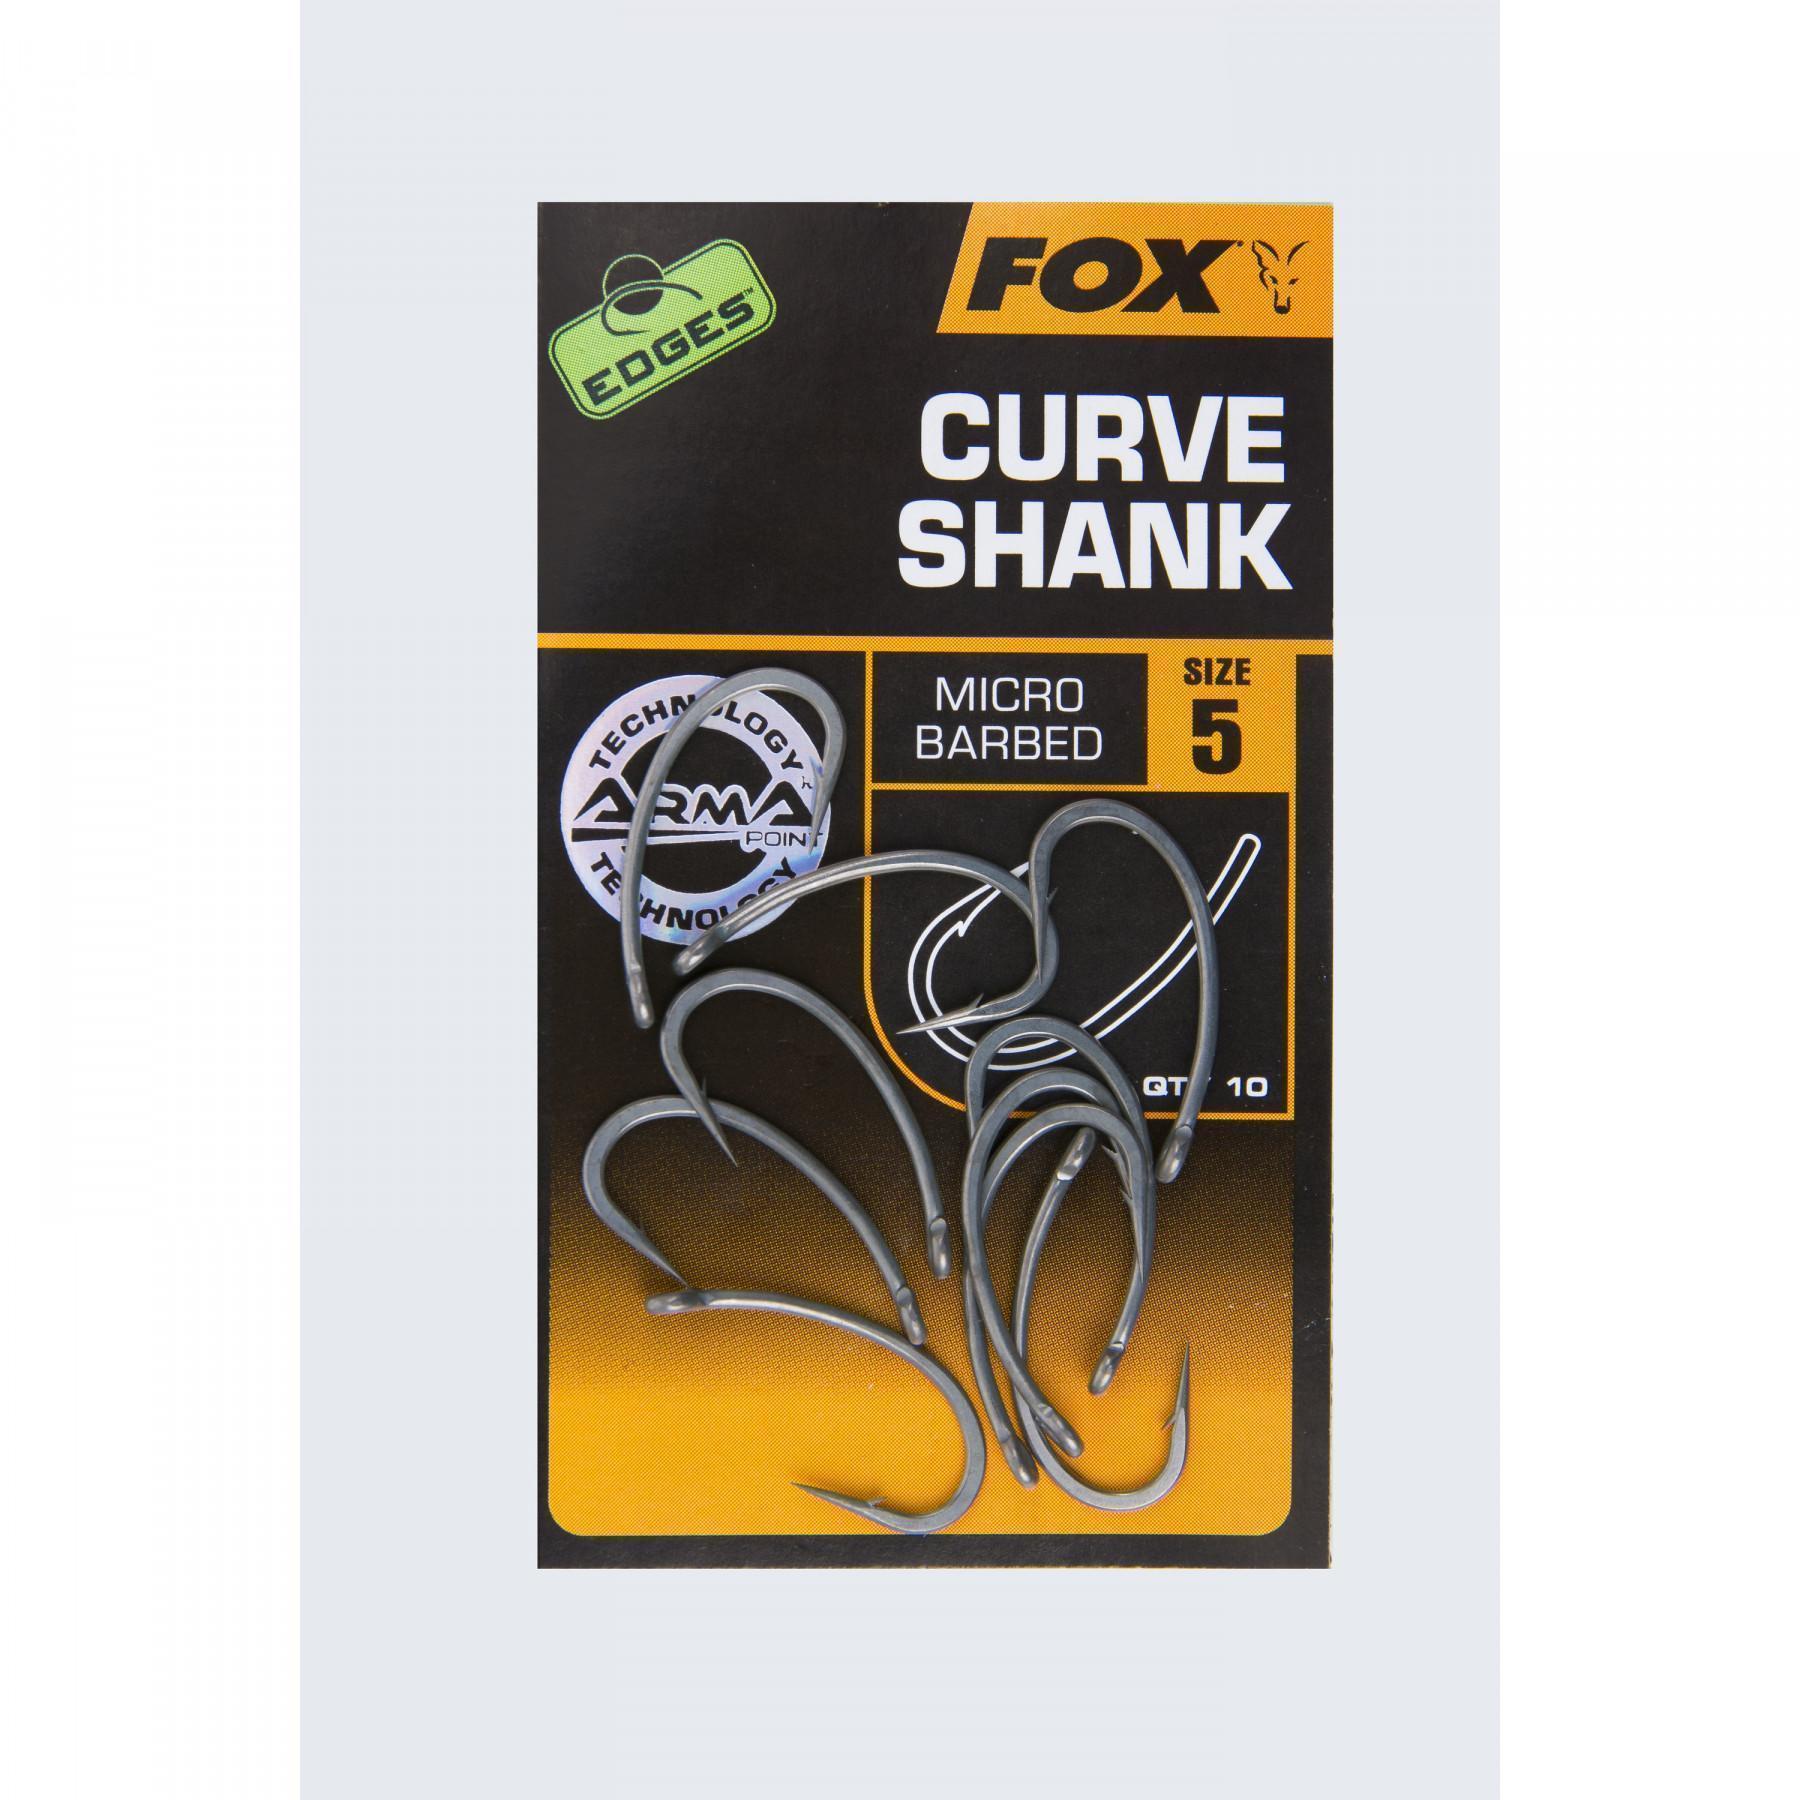 Haken Fox Curve Shank Edges taille 2